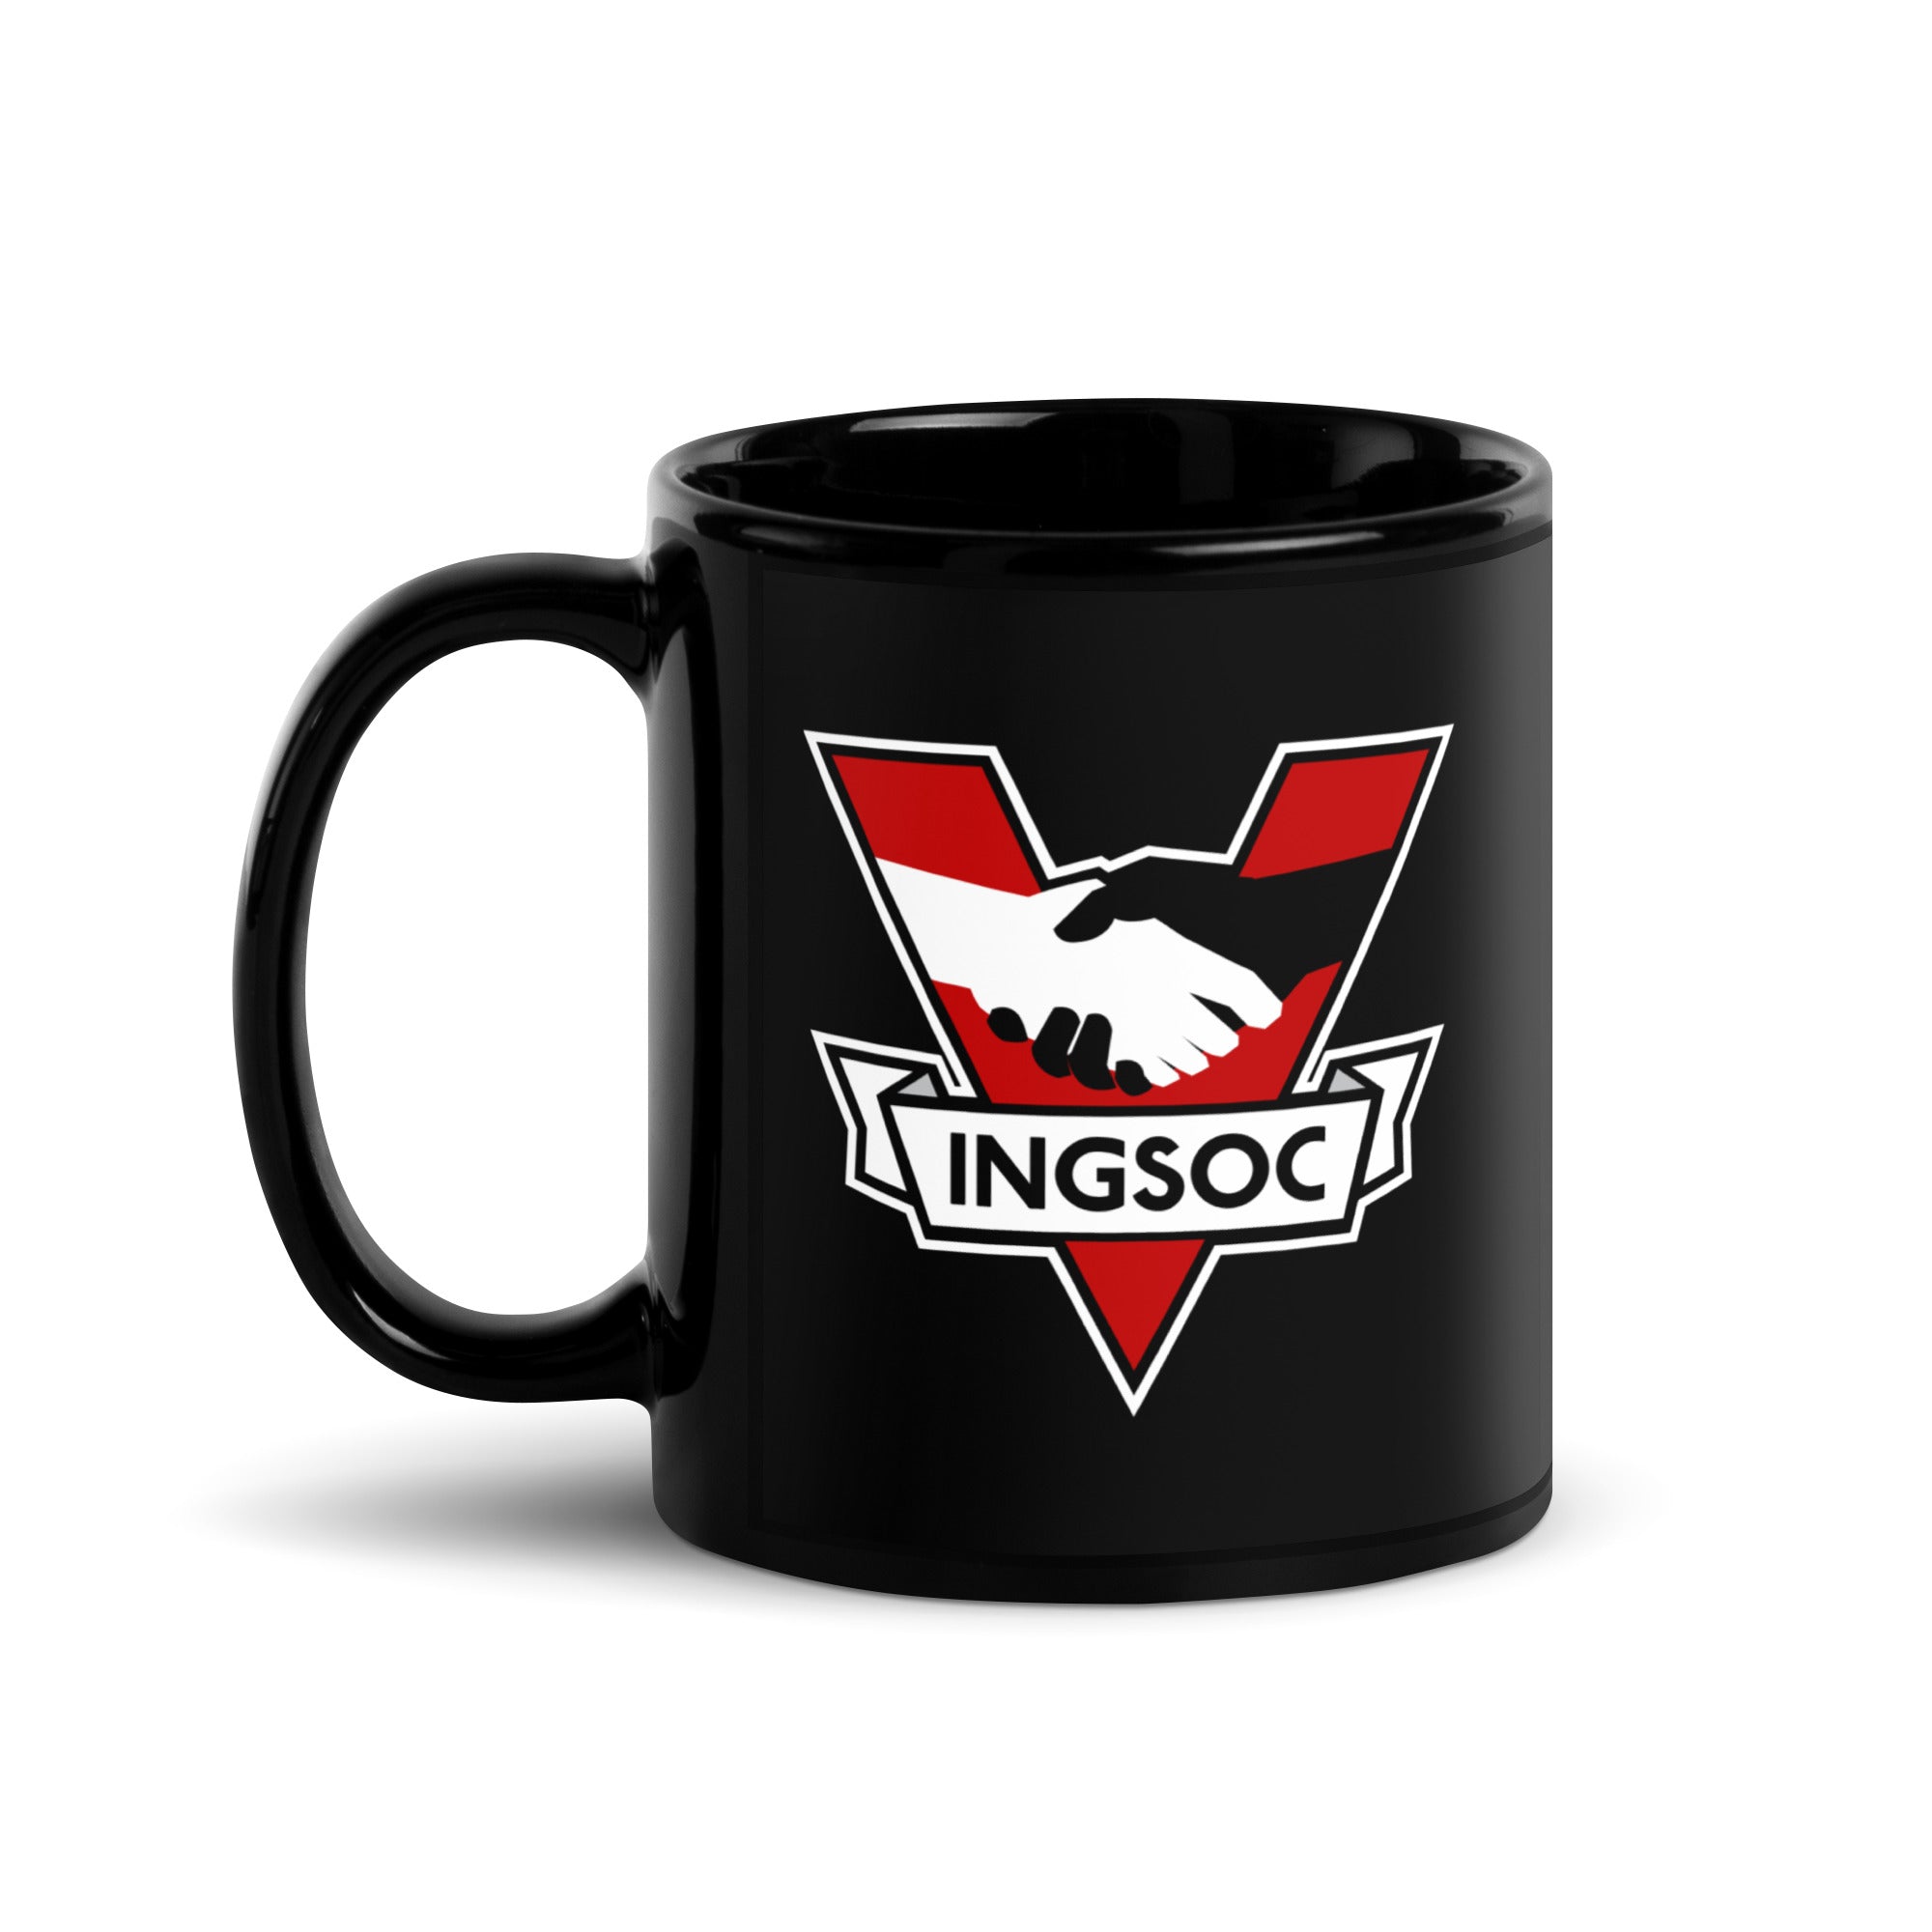 1984 INGSOC Thought Police Coffee Mug